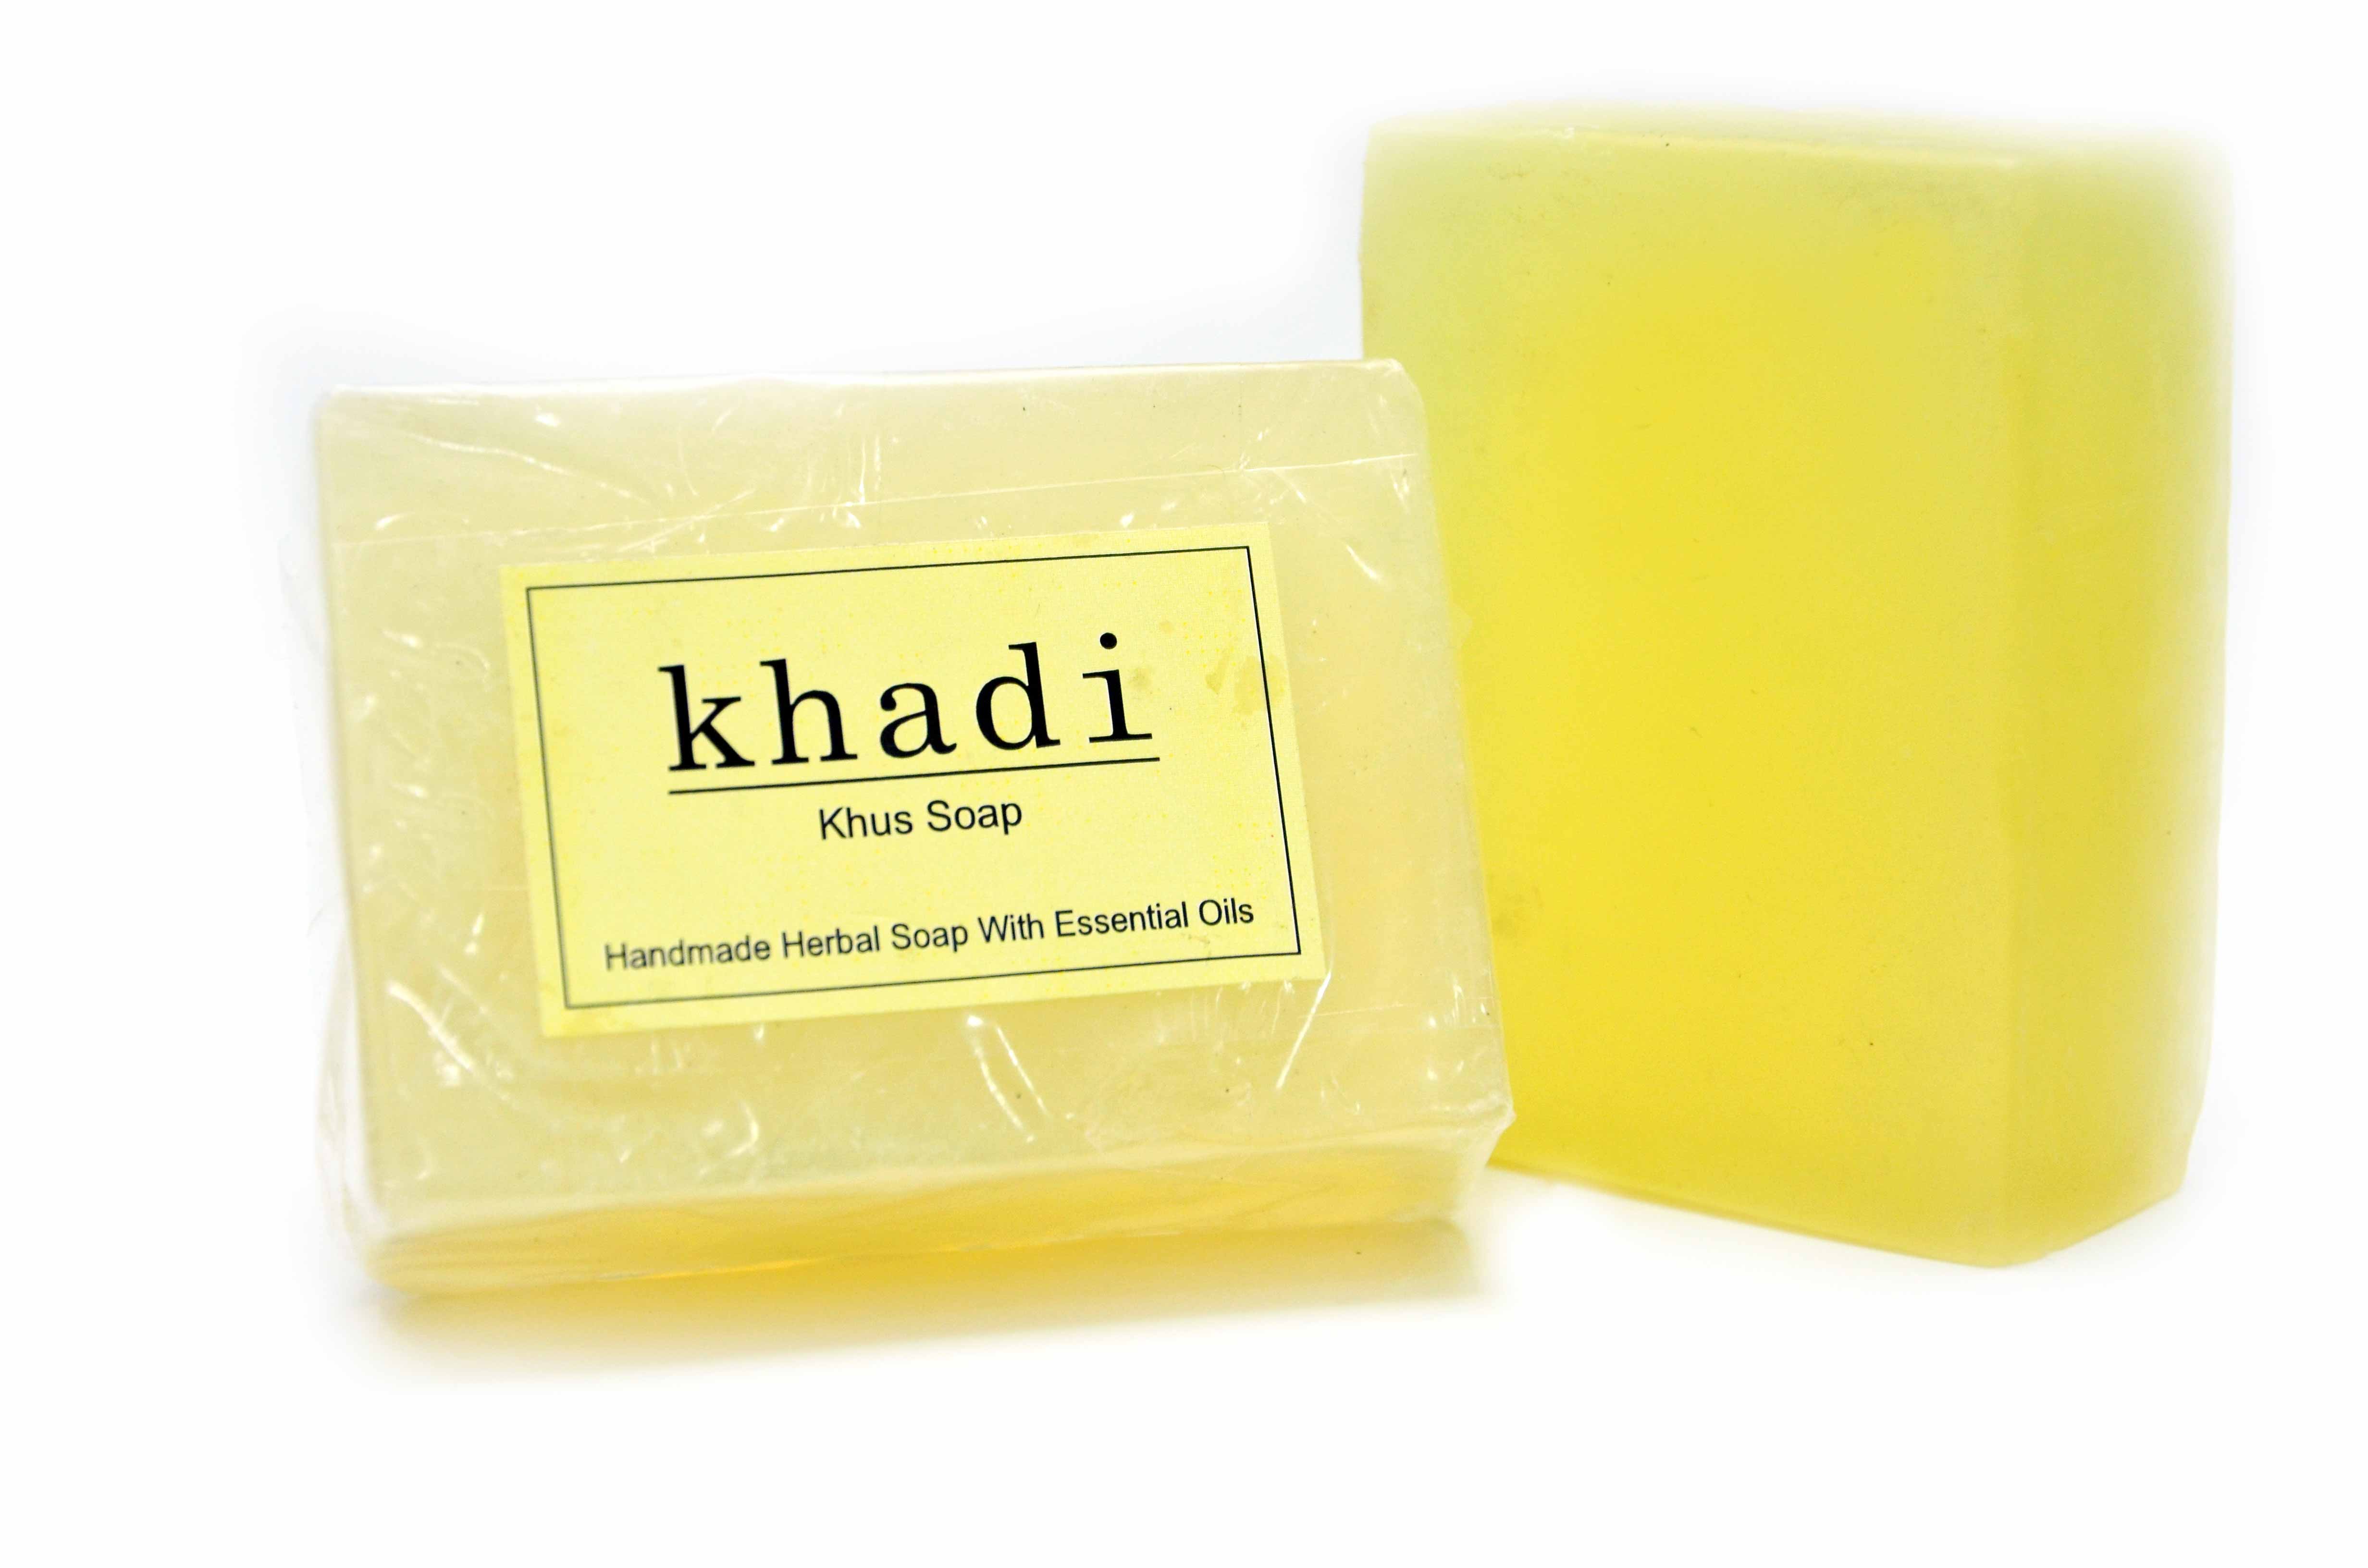 Vagad's Khadi Khus Soap